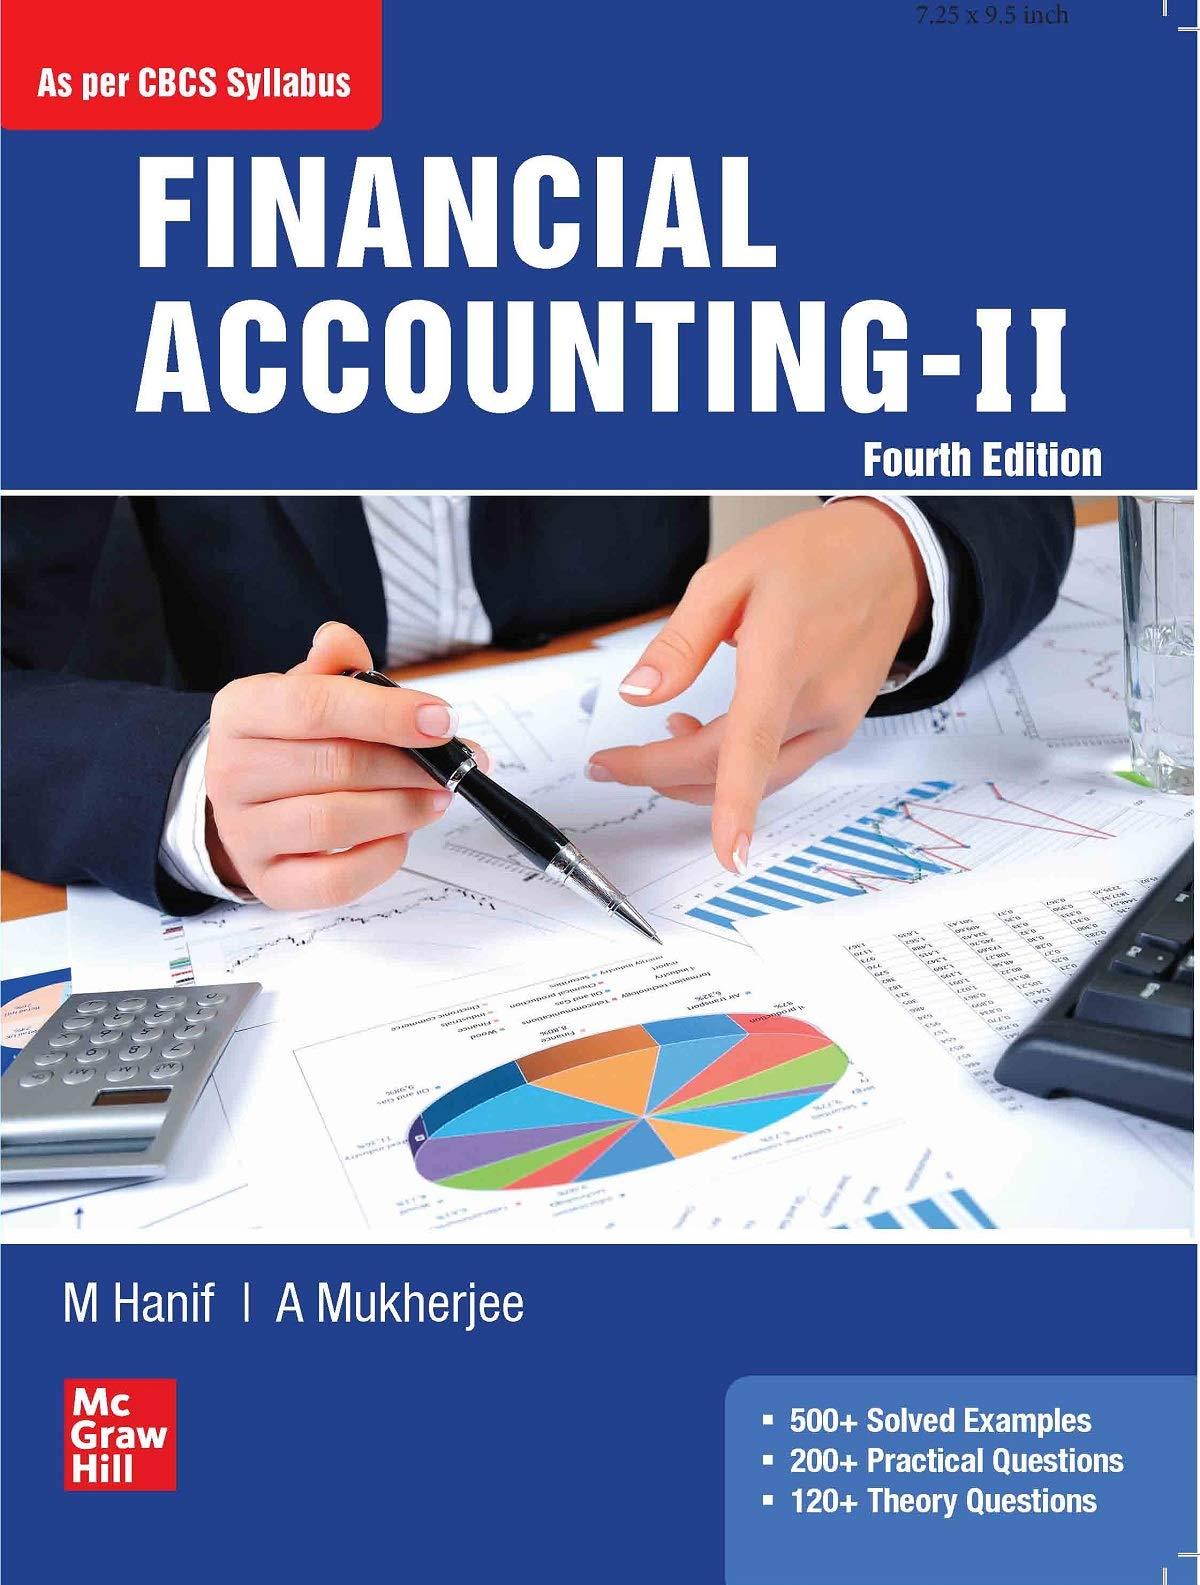 Financial Accounting Volume II